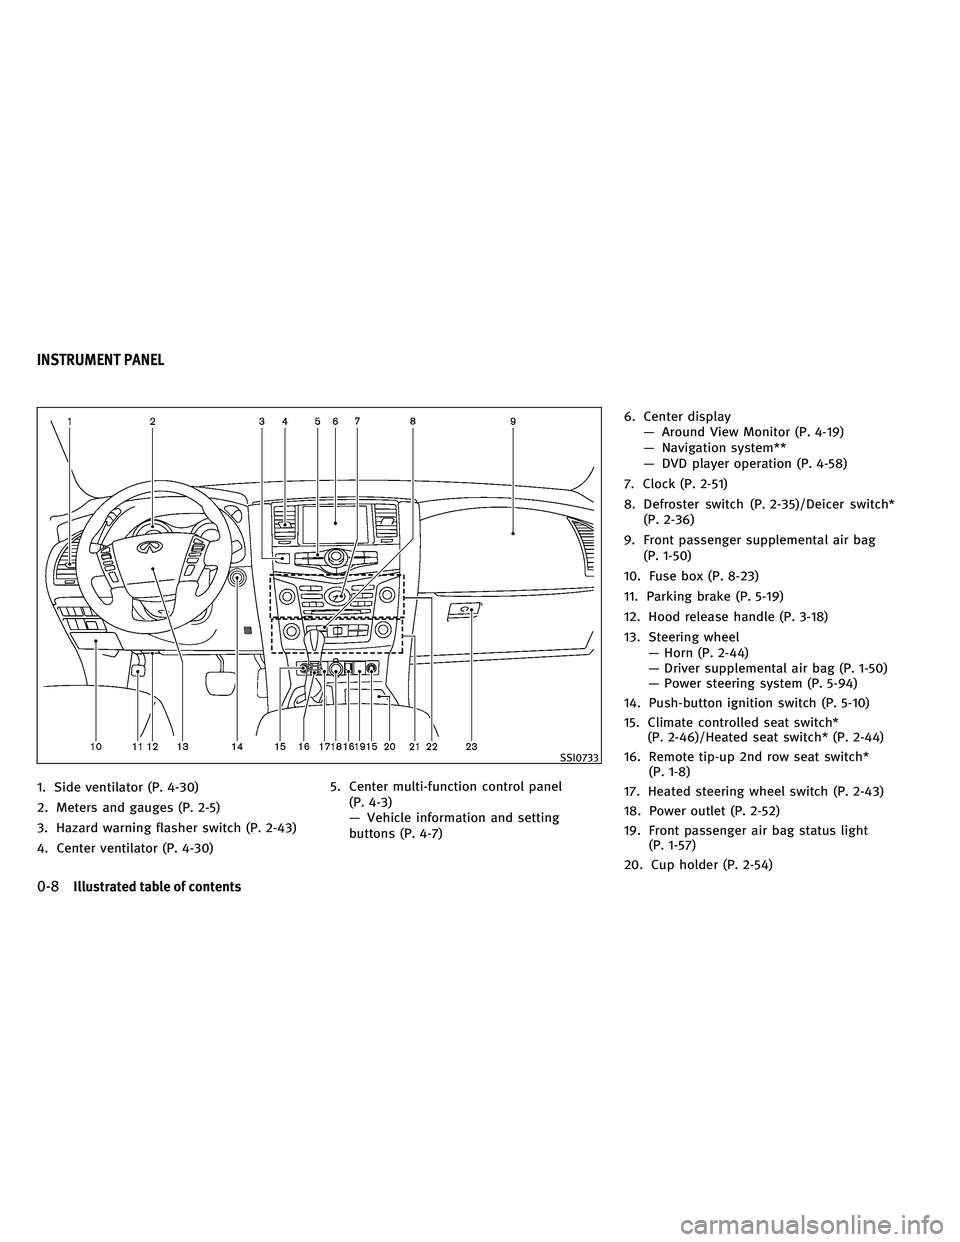 INFINITI QX 2011  Owners Manual 1. Side ventilator (P. 4-30)
2. Meters and gauges (P. 2-5)
3. Hazard warning flasher switch (P. 2-43)
4. Center ventilator (P. 4-30)5. Center multi-function control panel
(P. 4-3)
— Vehicle informat